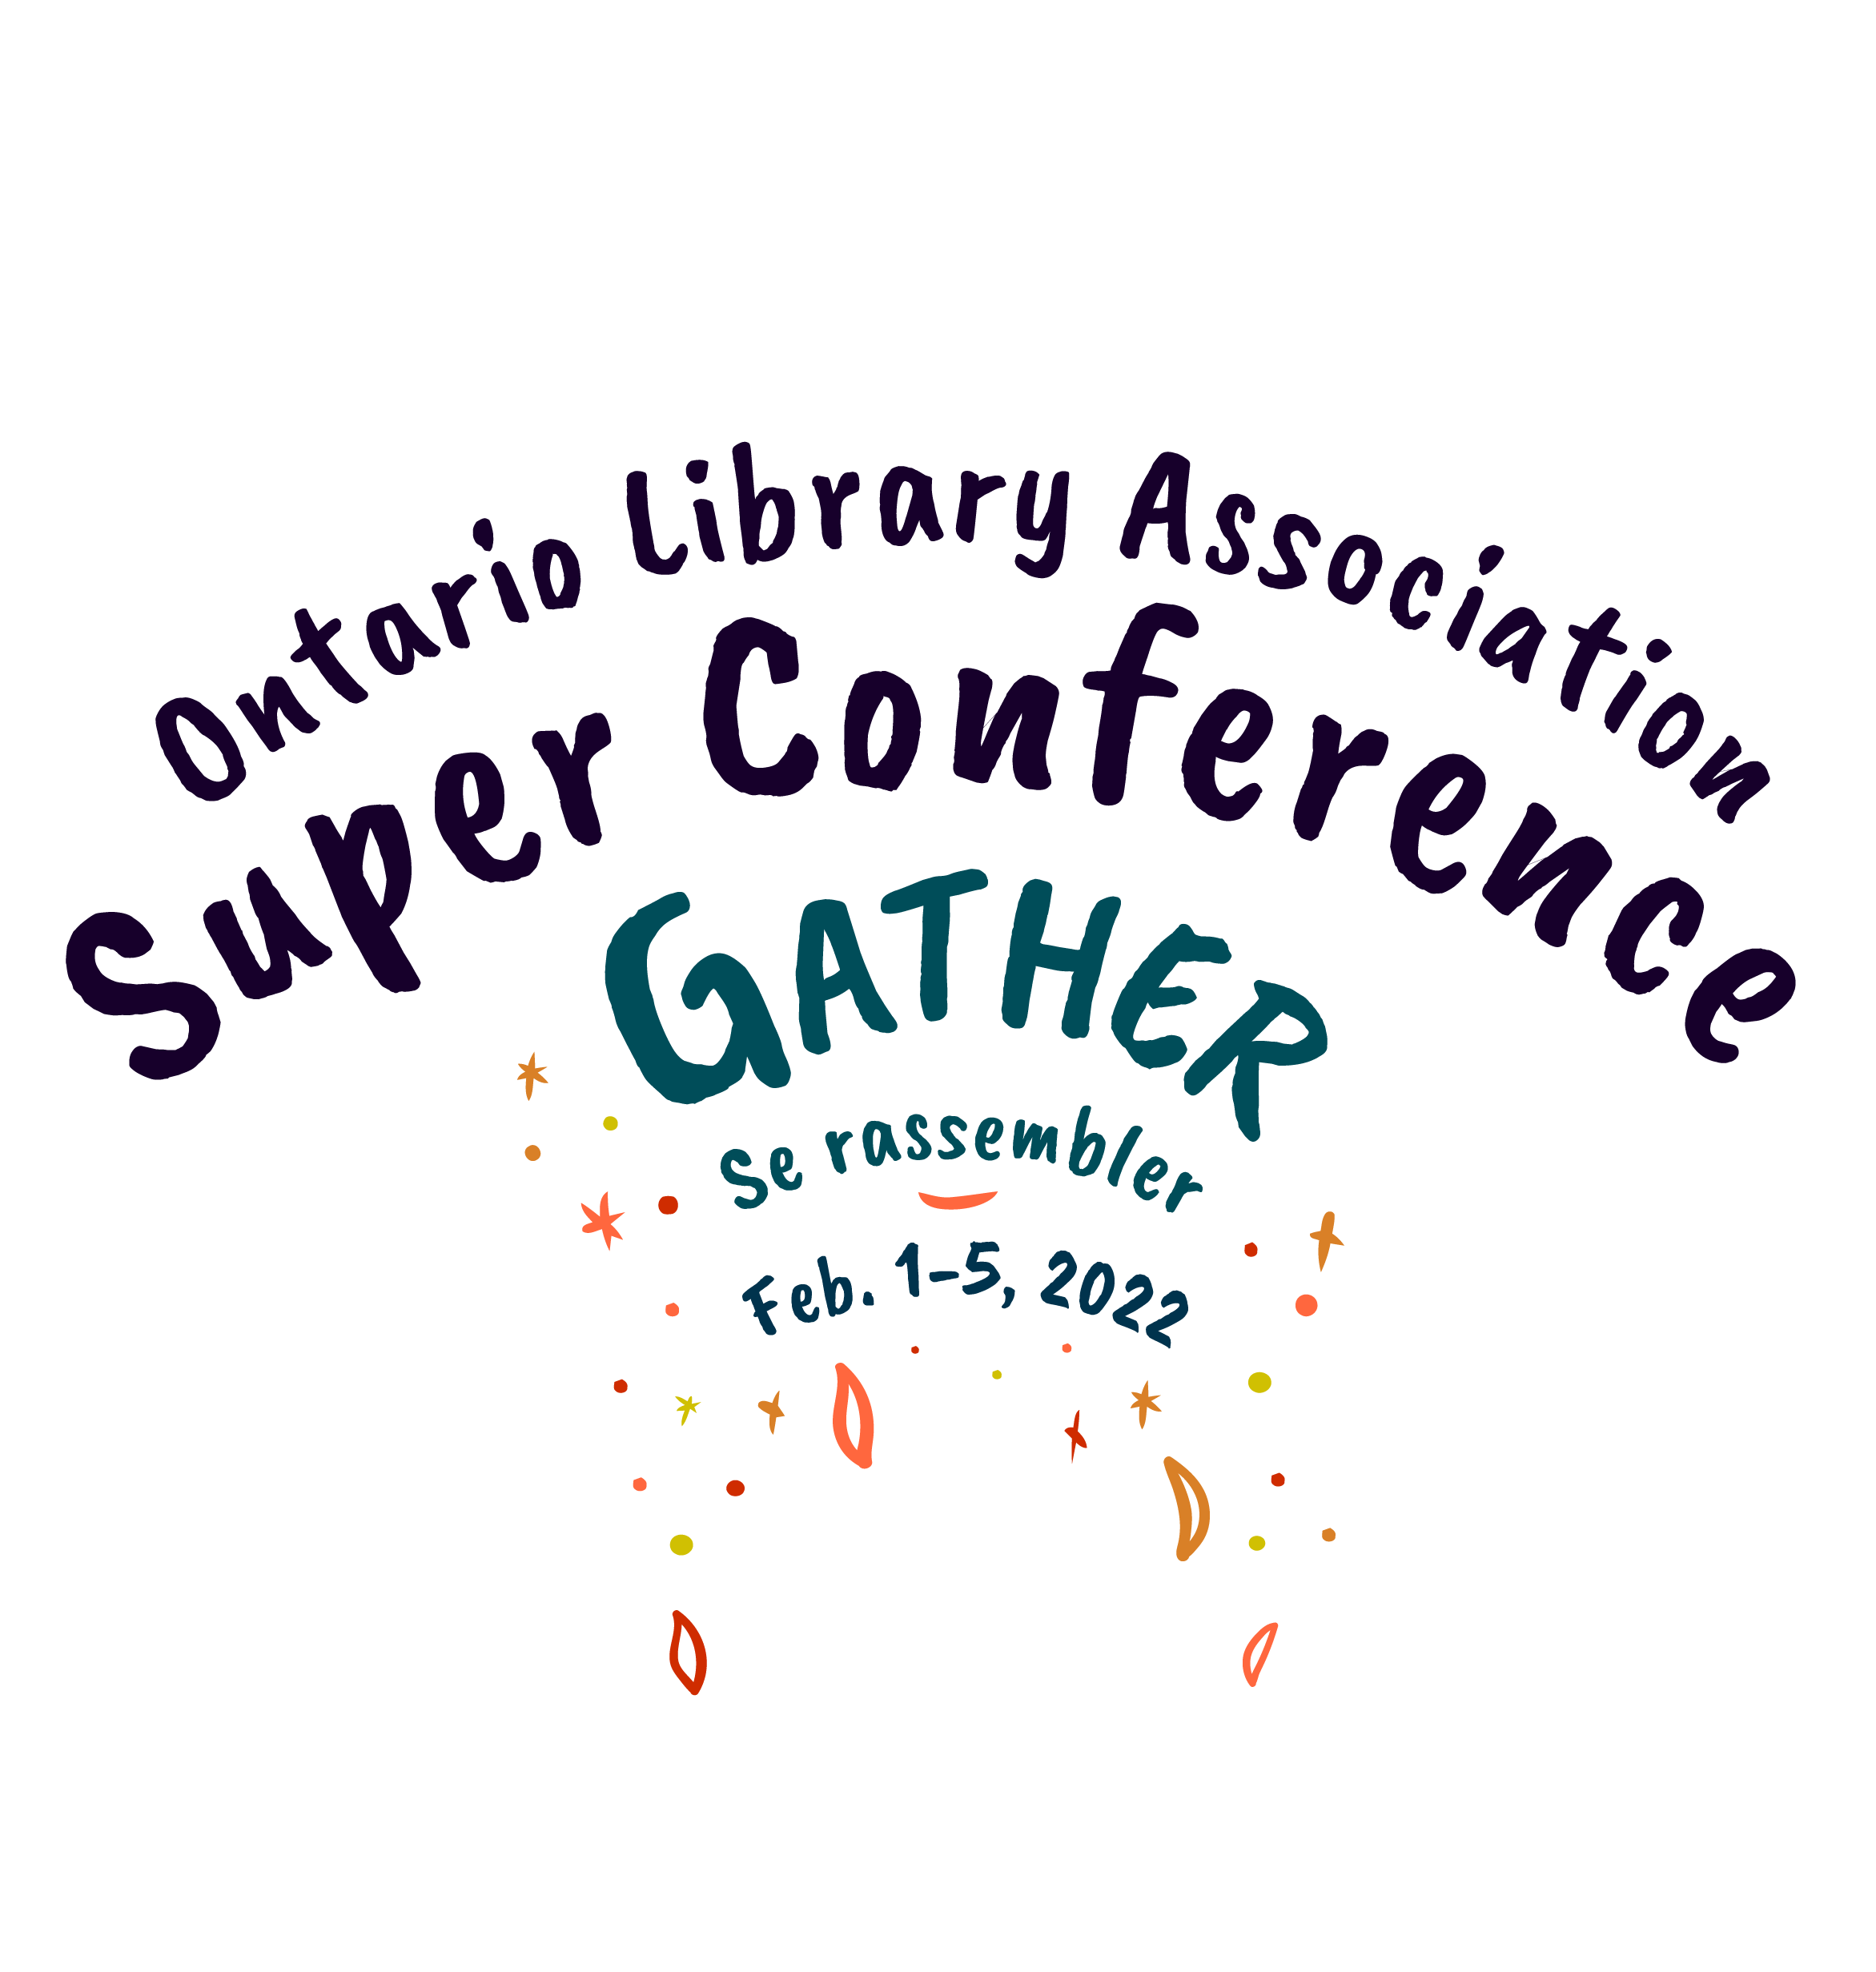 Ontario Library Association conference logo